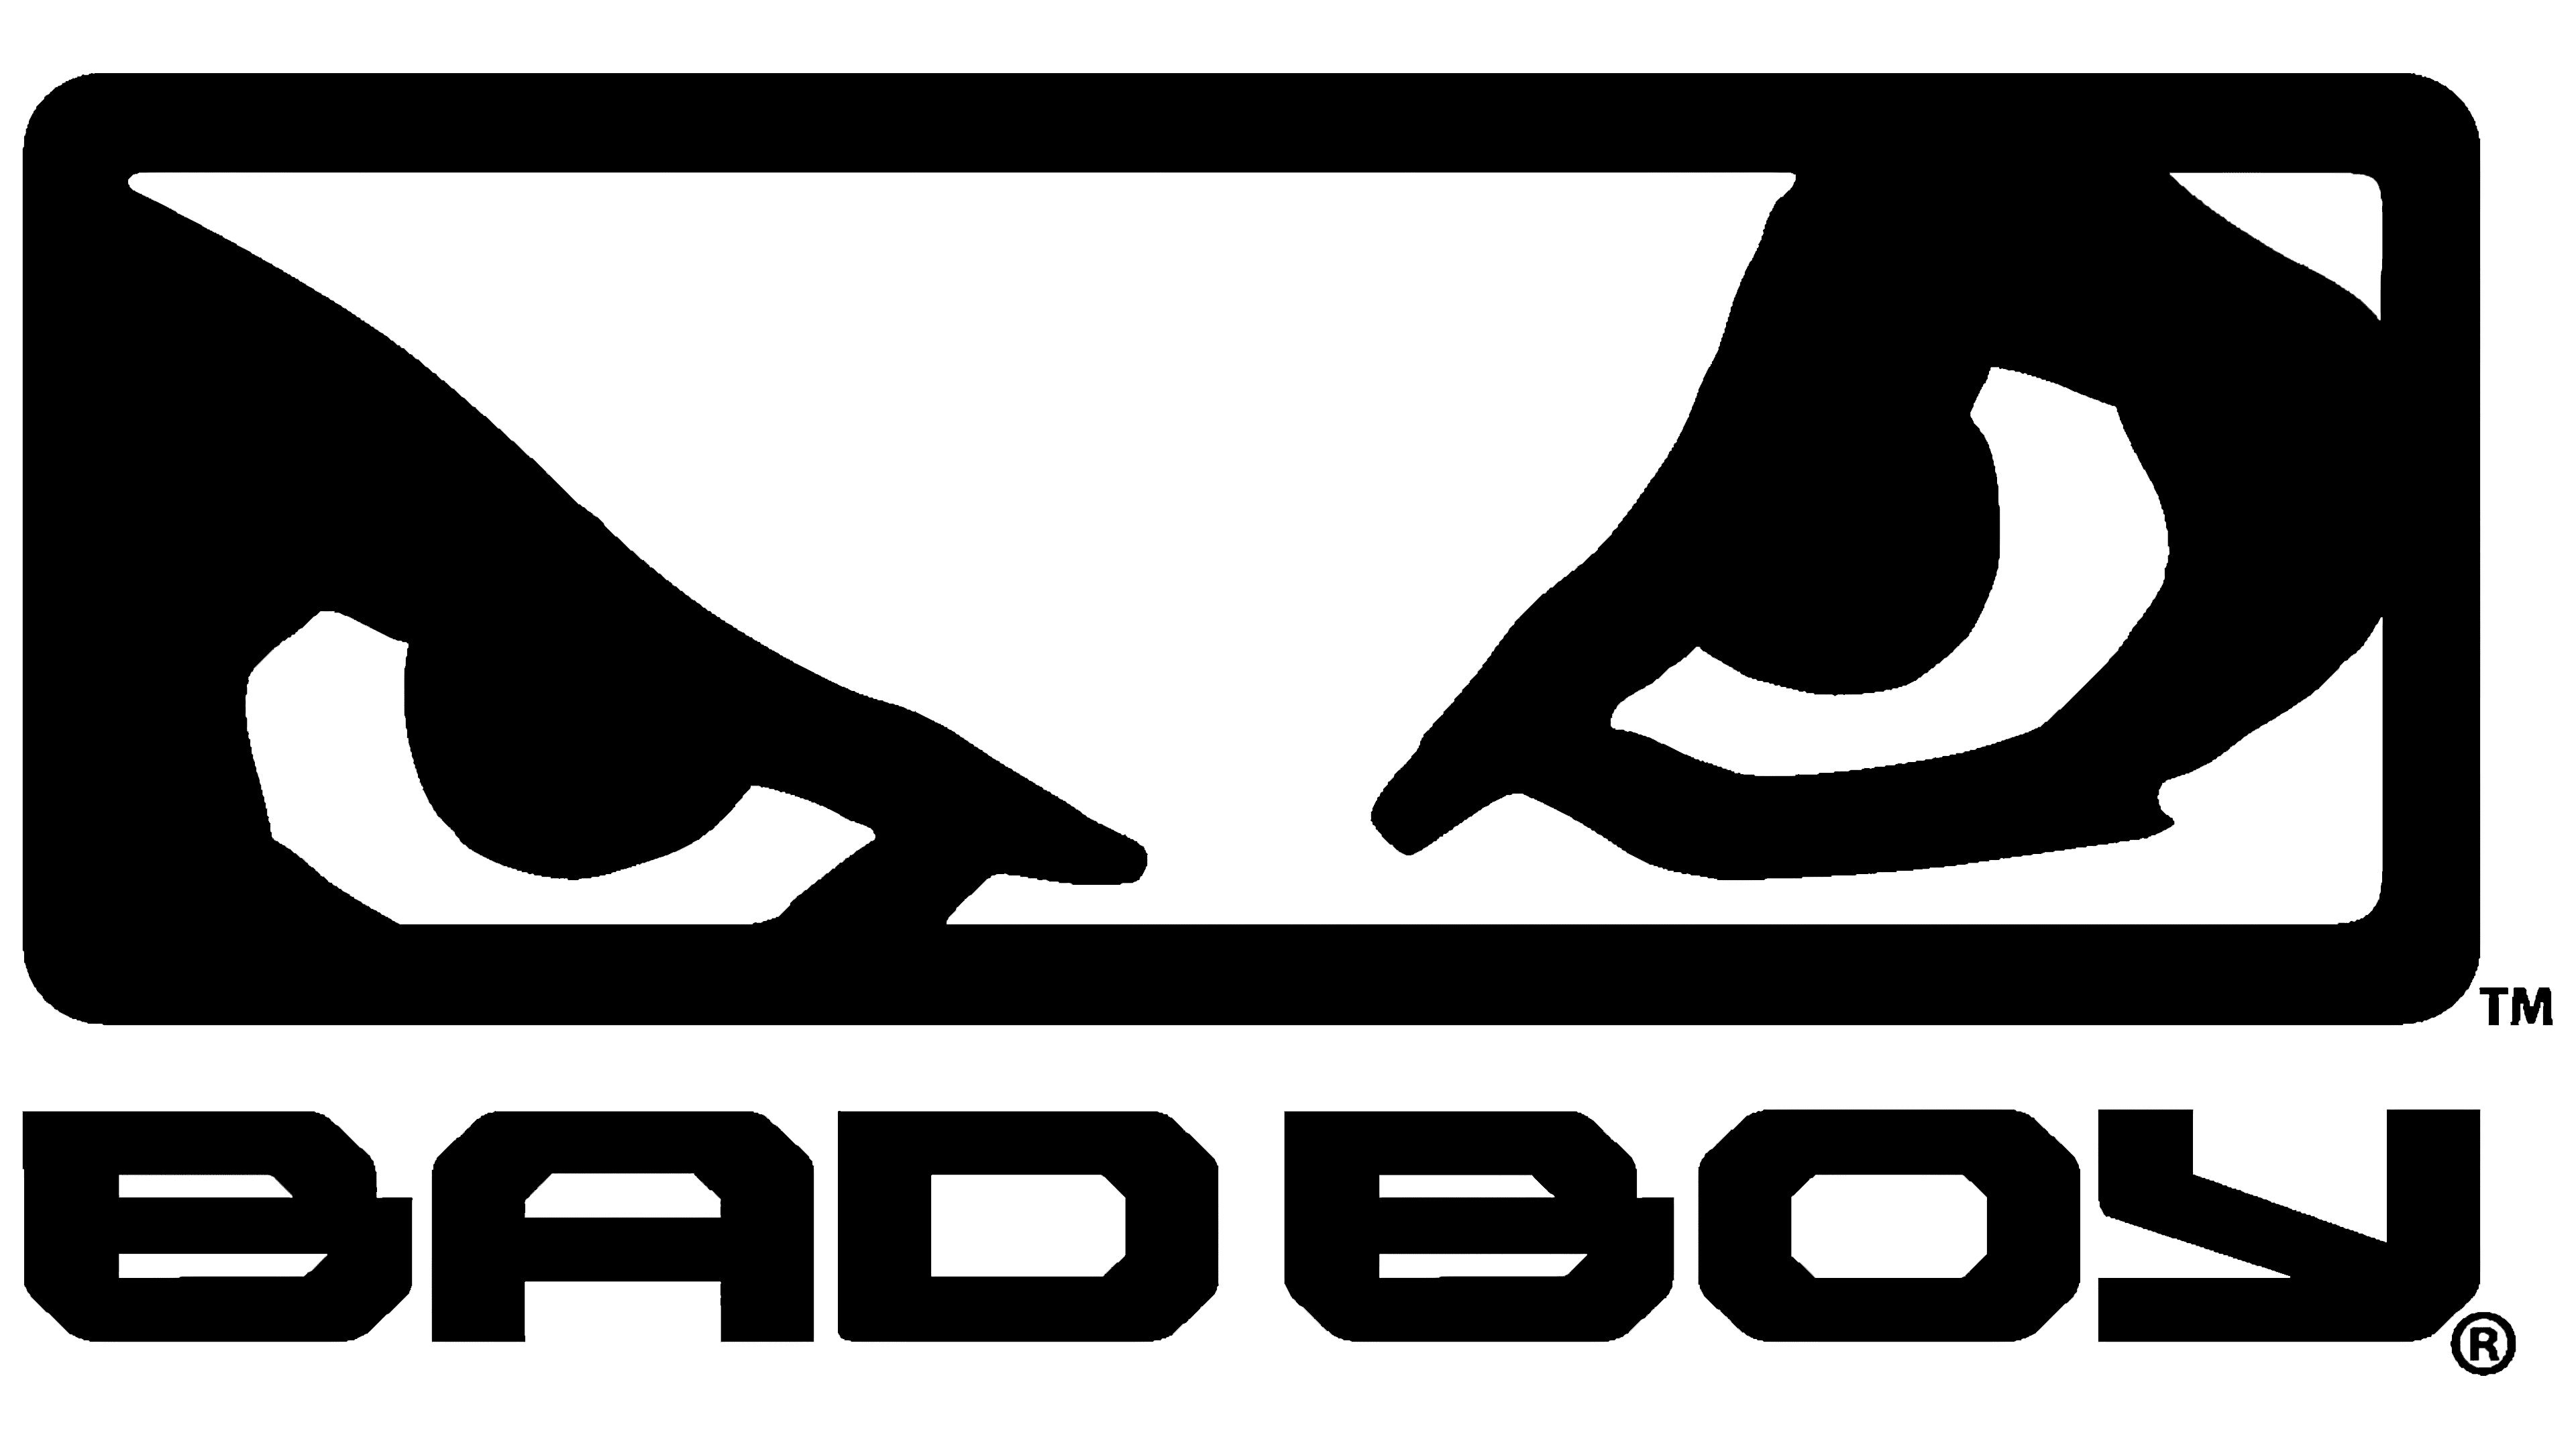 100,000 Bad boy logo Vector Images | Depositphotos